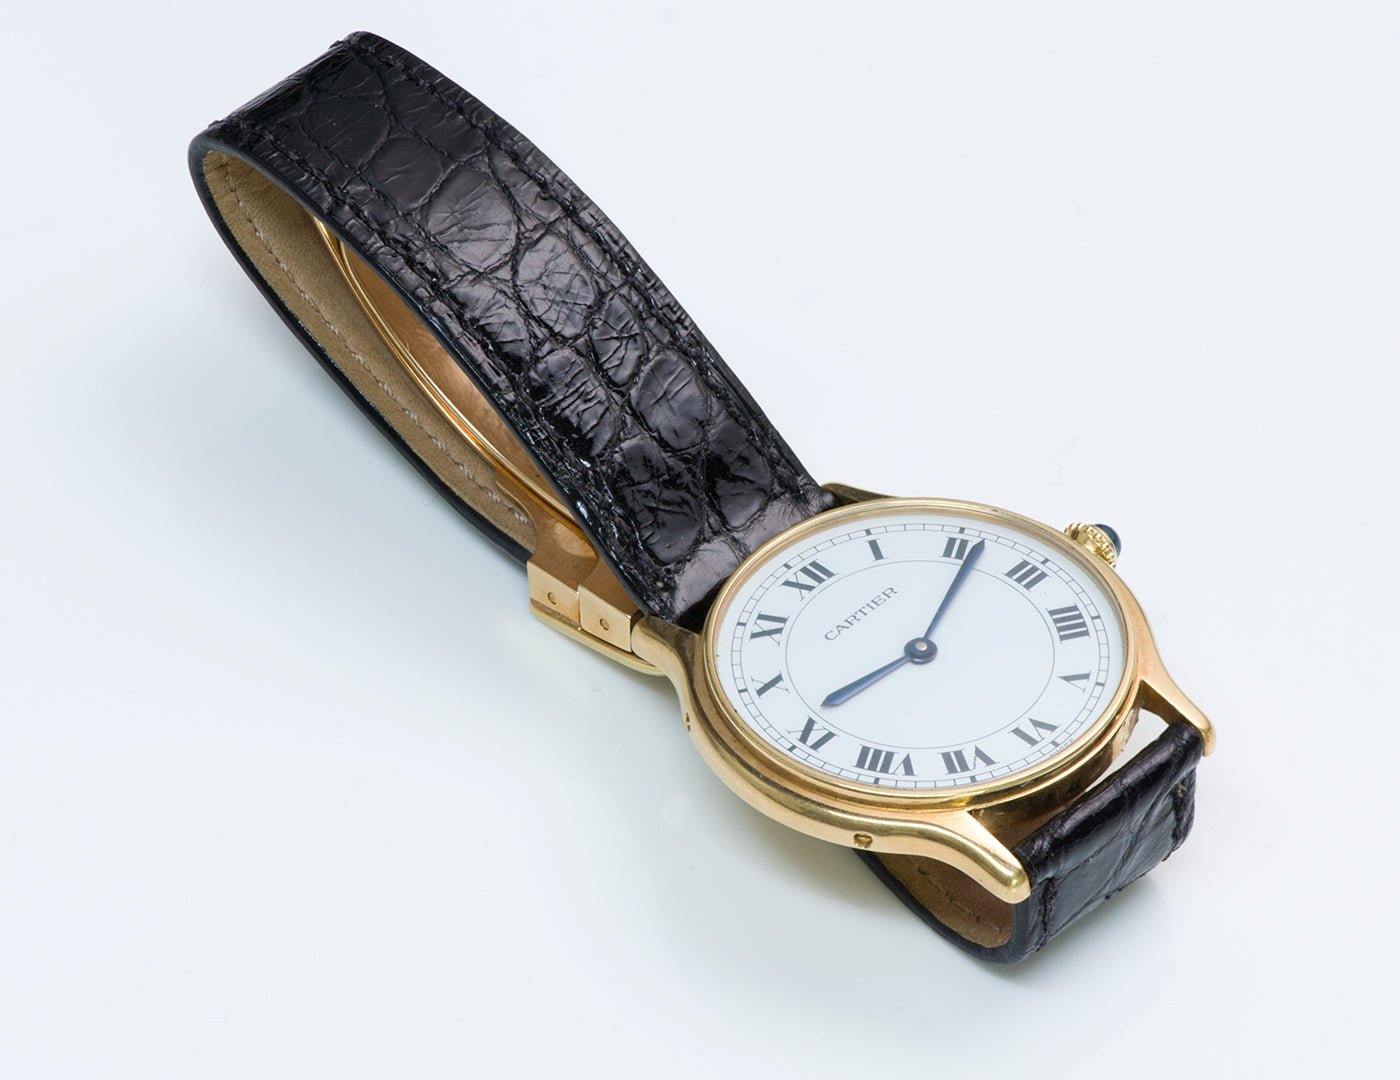 Cartier Paris Gold Watch - DSF Antique Jewelry